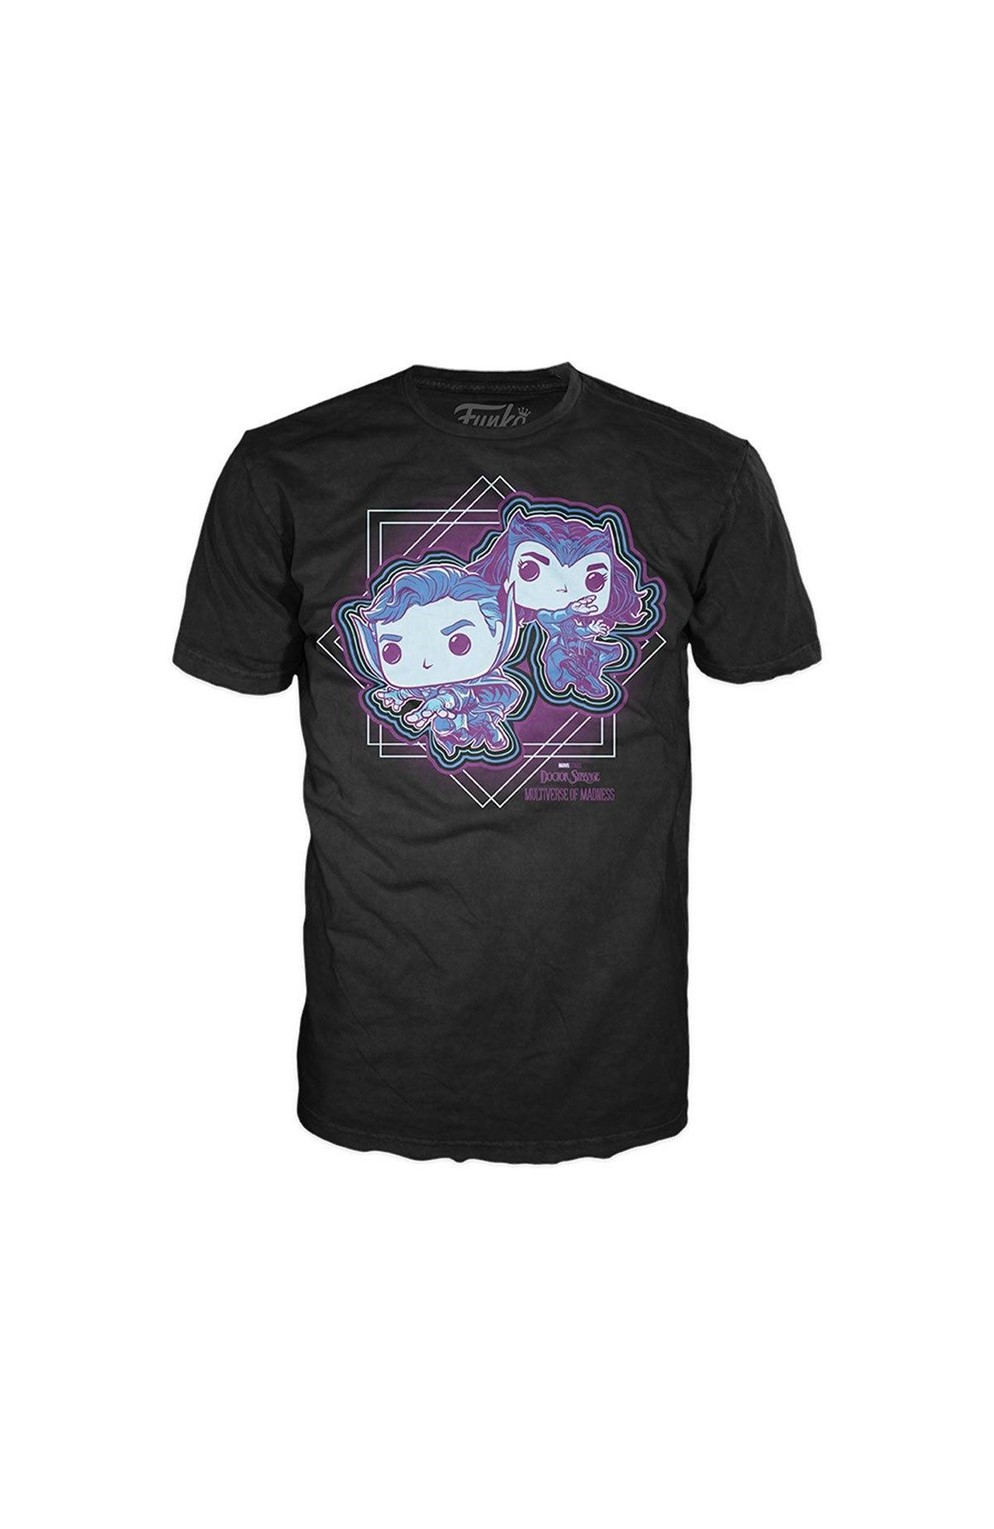 Funko Doctor Strange T-Shirt Size Medium